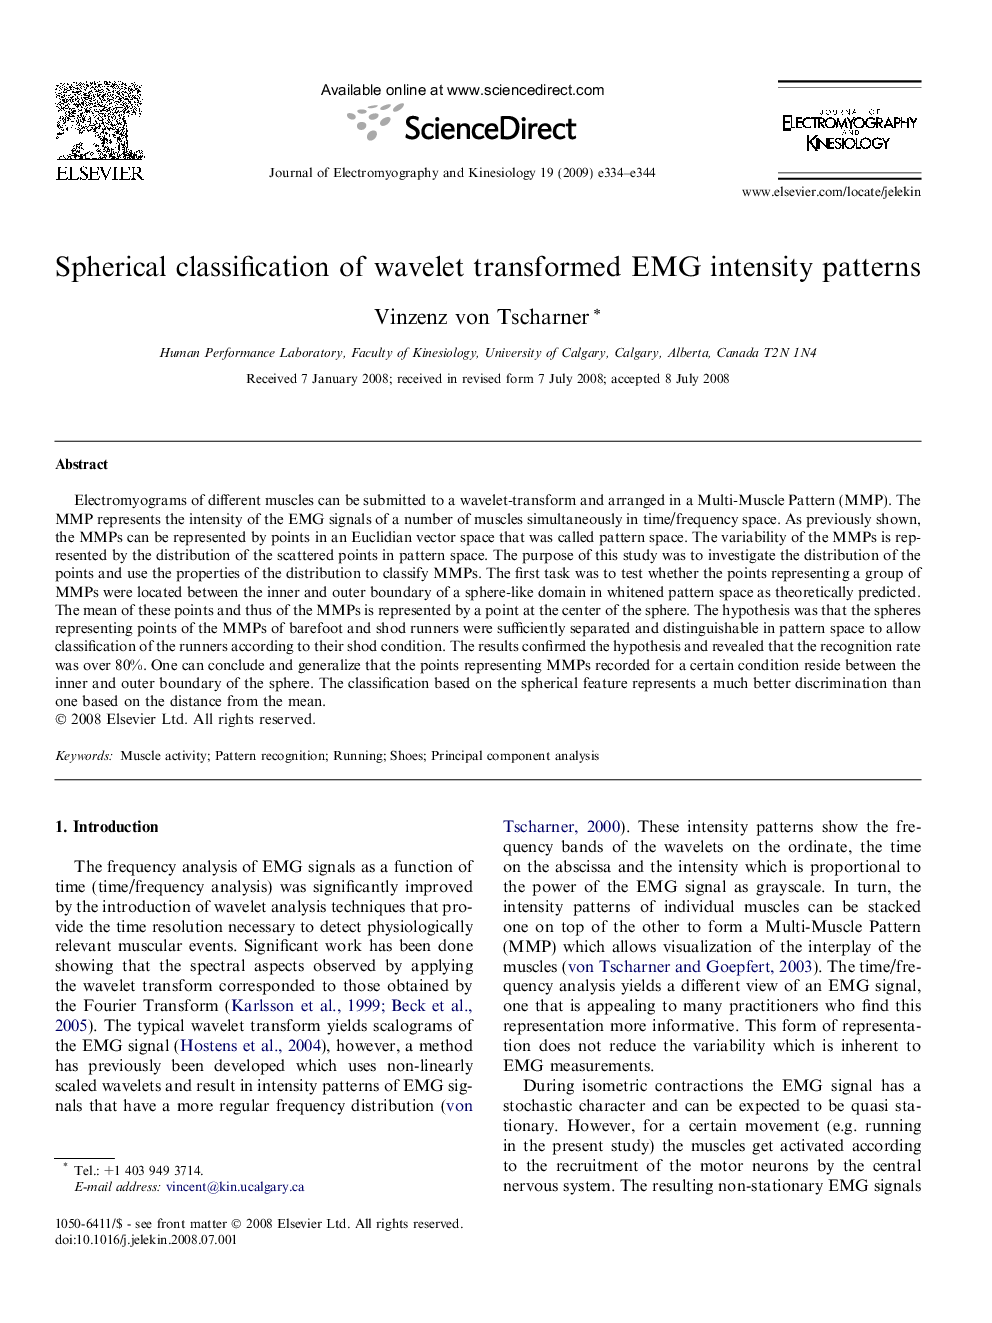 Spherical classification of wavelet transformed EMG intensity patterns